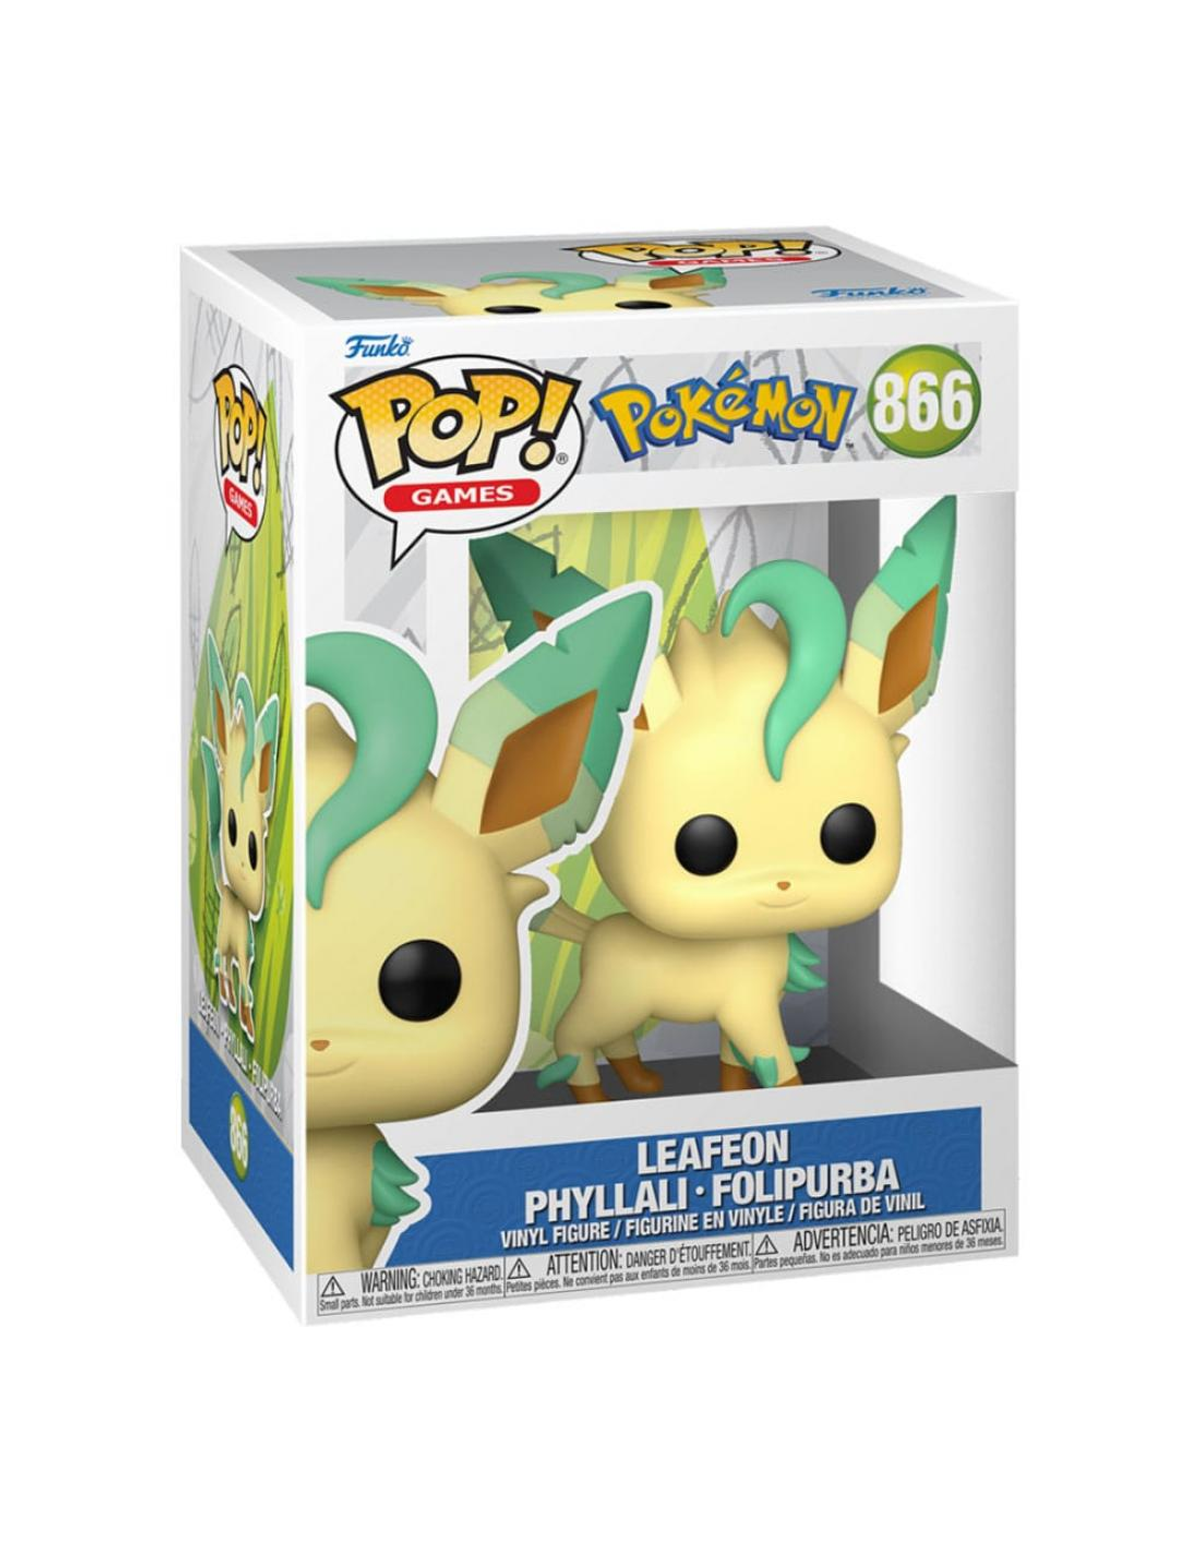 - / / POP Pokemon Leafeon Folipurba - Phyllali